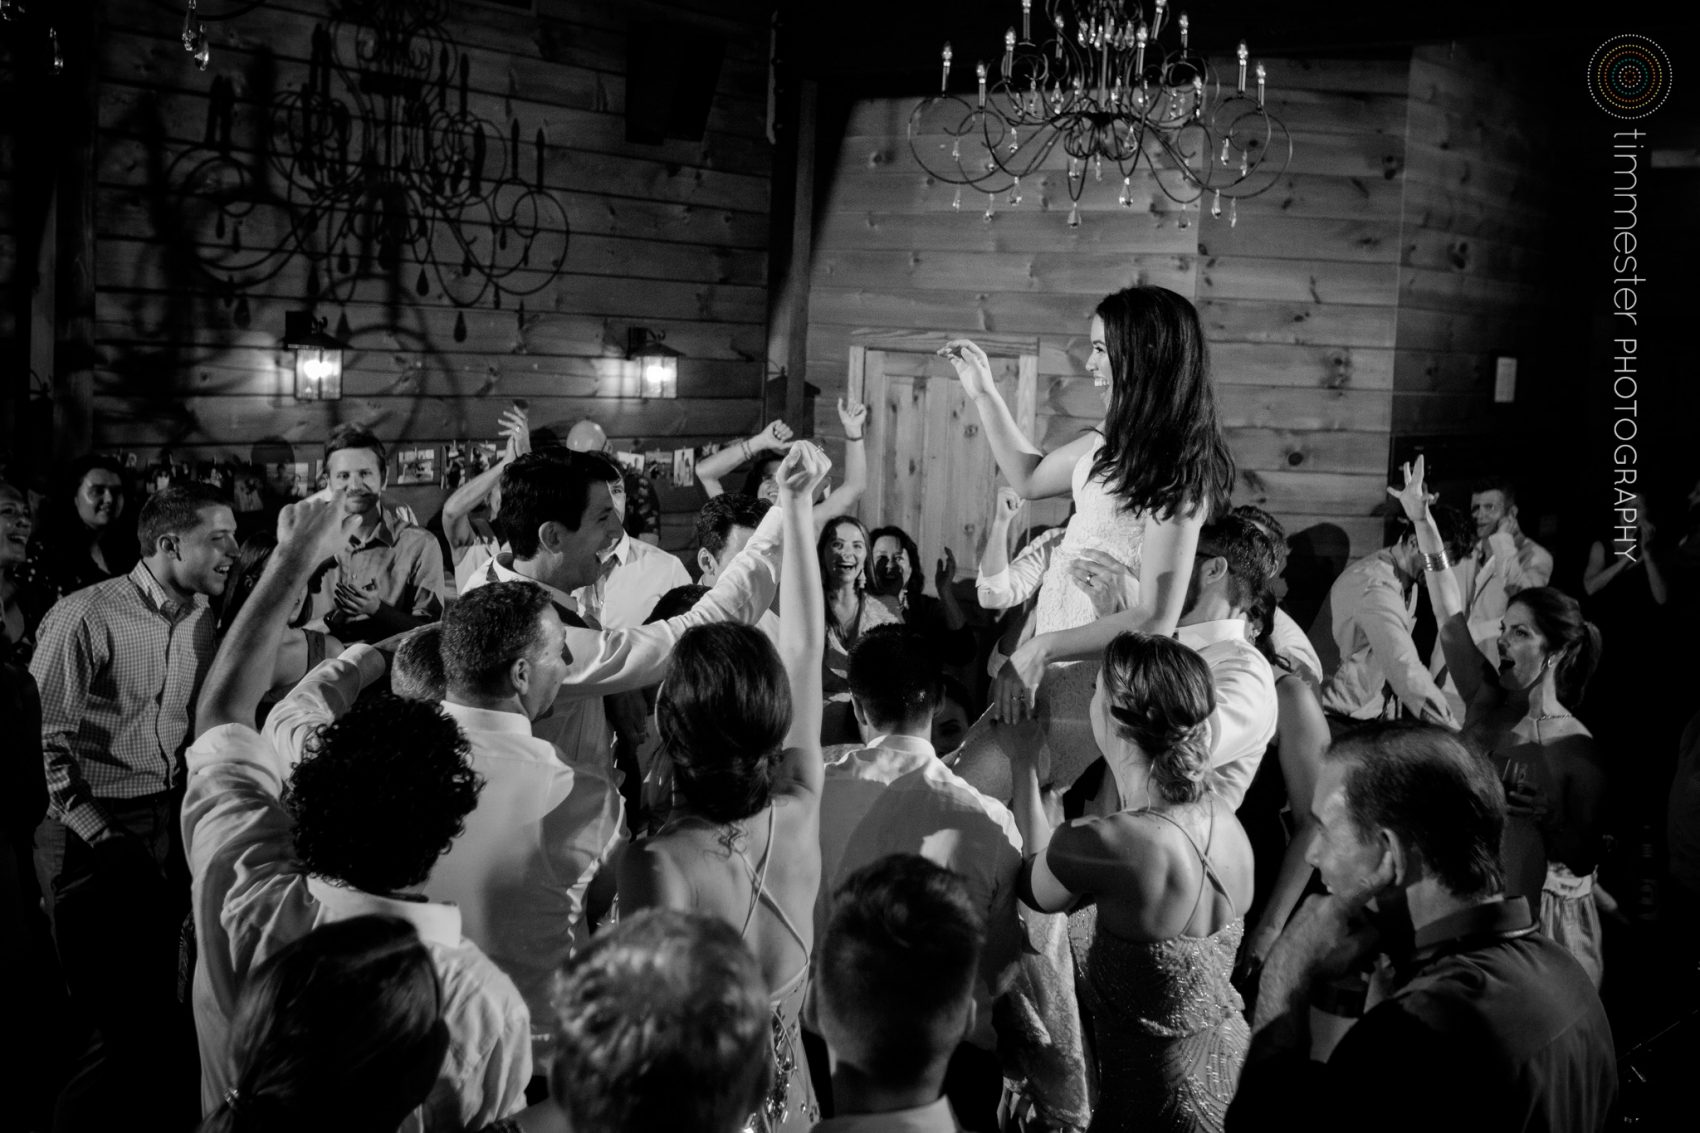 Chloe & Chris' wedding reception at the Barn at Valhalla in Chapel Hill, North Carolina.